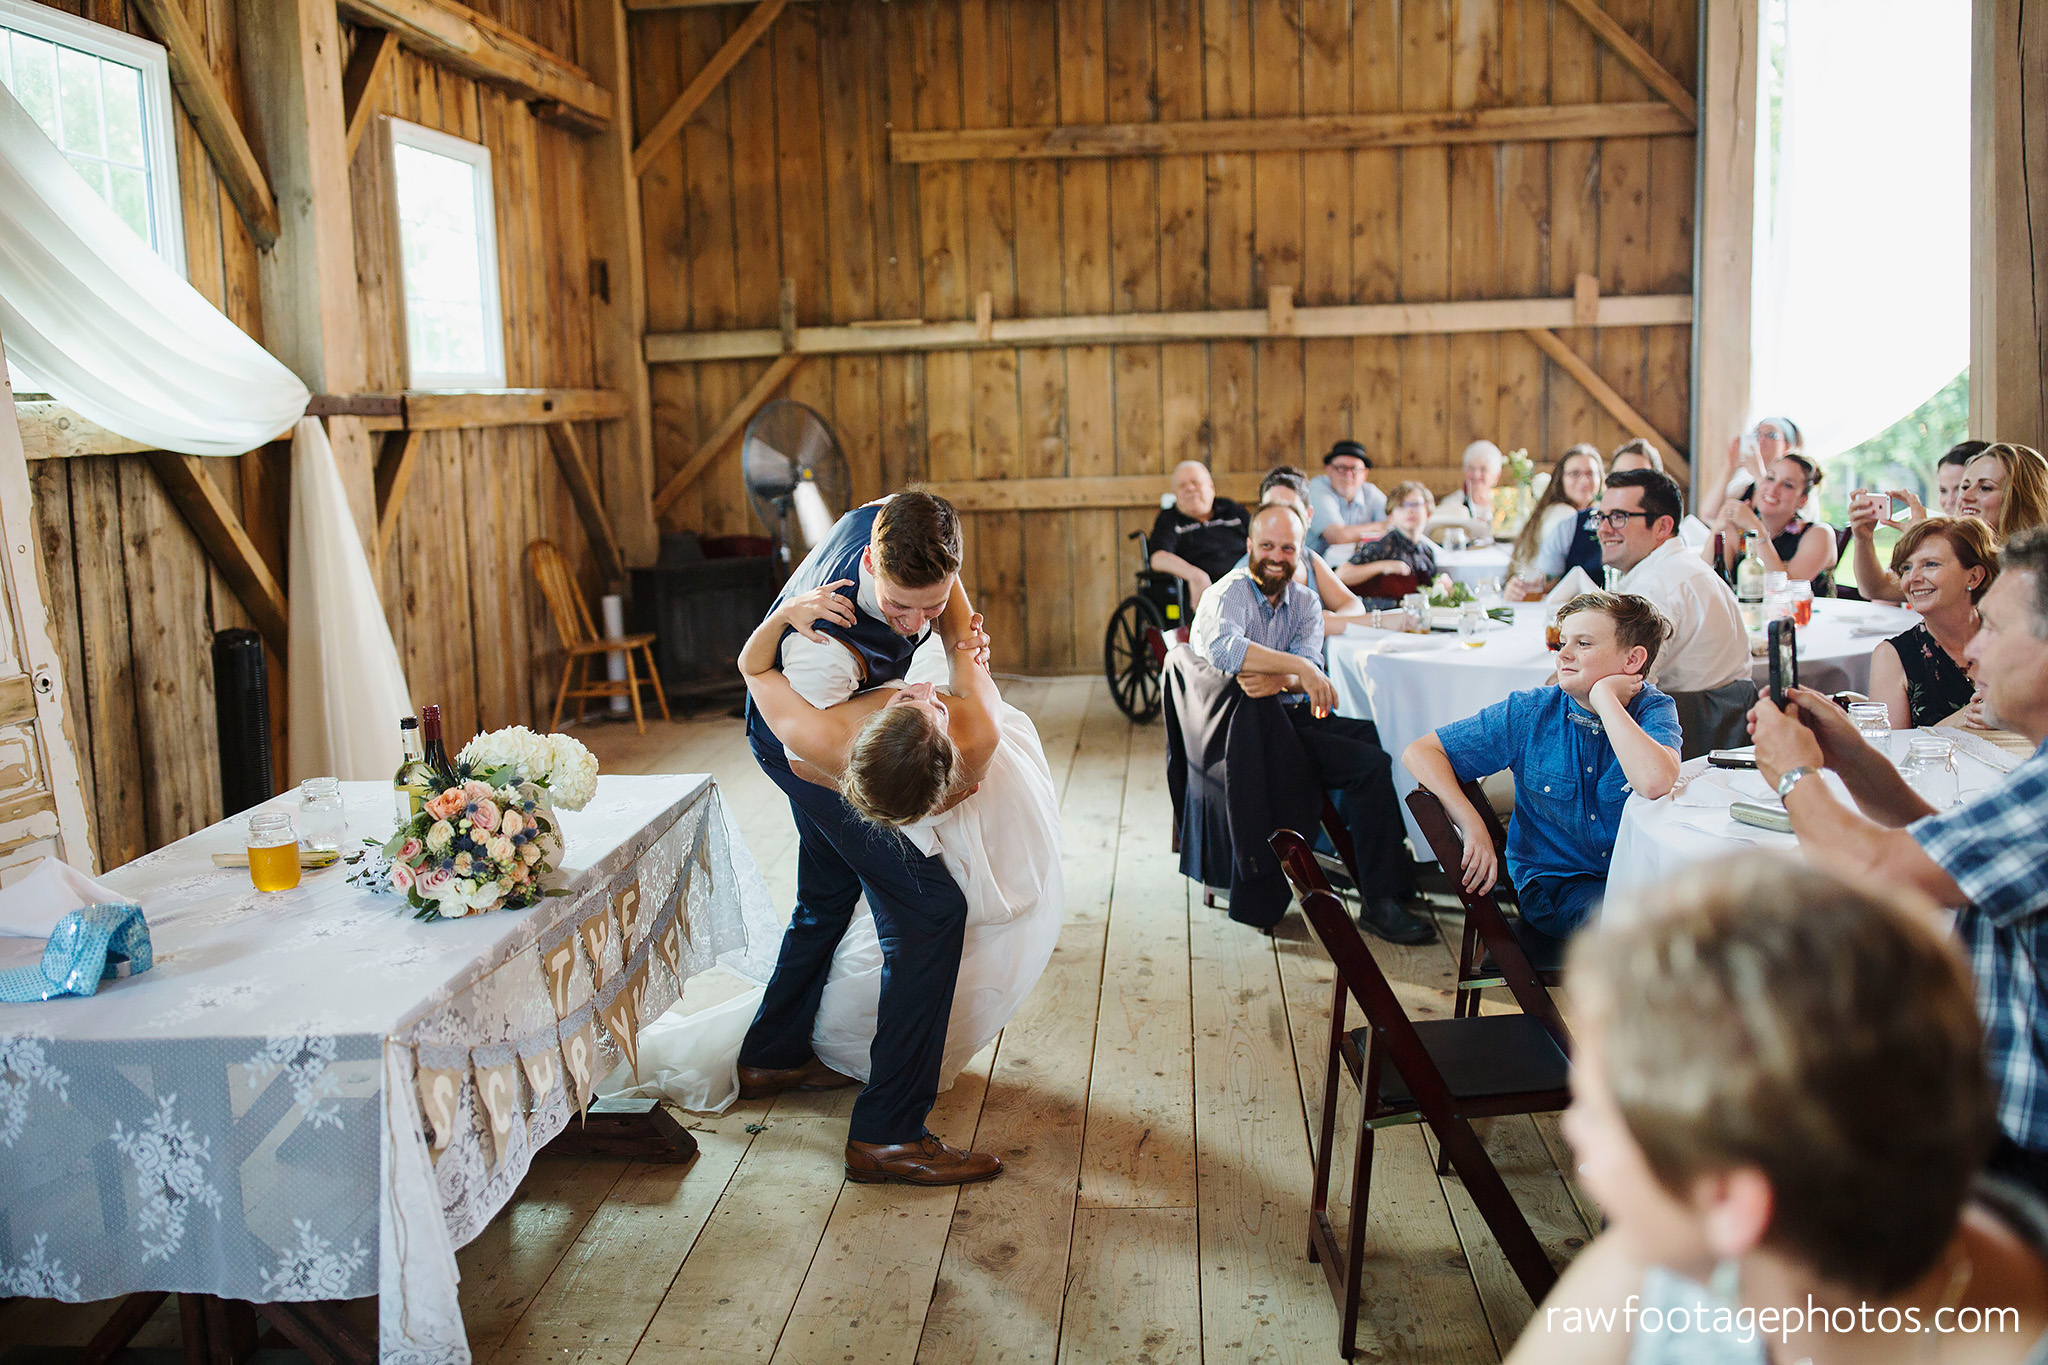 London_Ontario_Wedding_Photographer-Raw_Footage_photography-Forest_wedding-Woodsy_wedding-DIY_Wedding-Candid_Wedding_Photography081.jpg